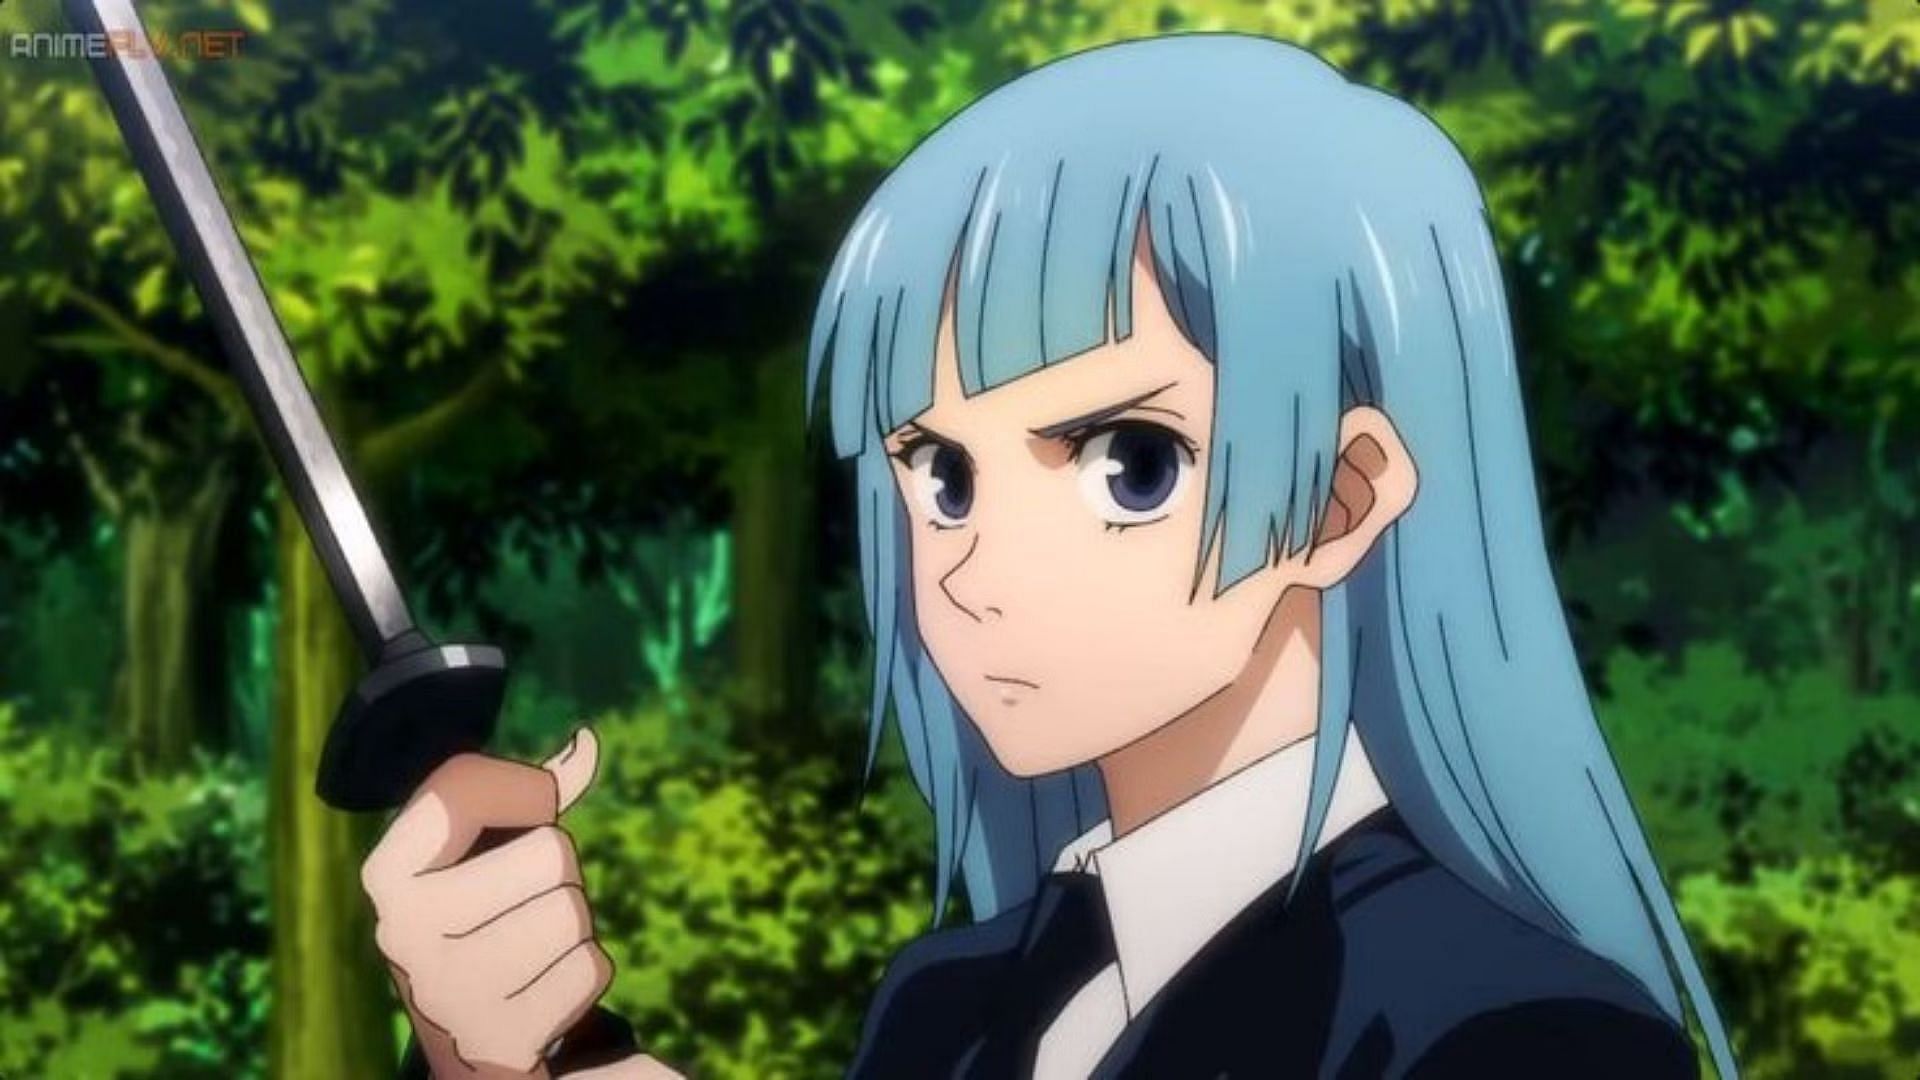 Miwa as seen in the anime (image via MAPPA)